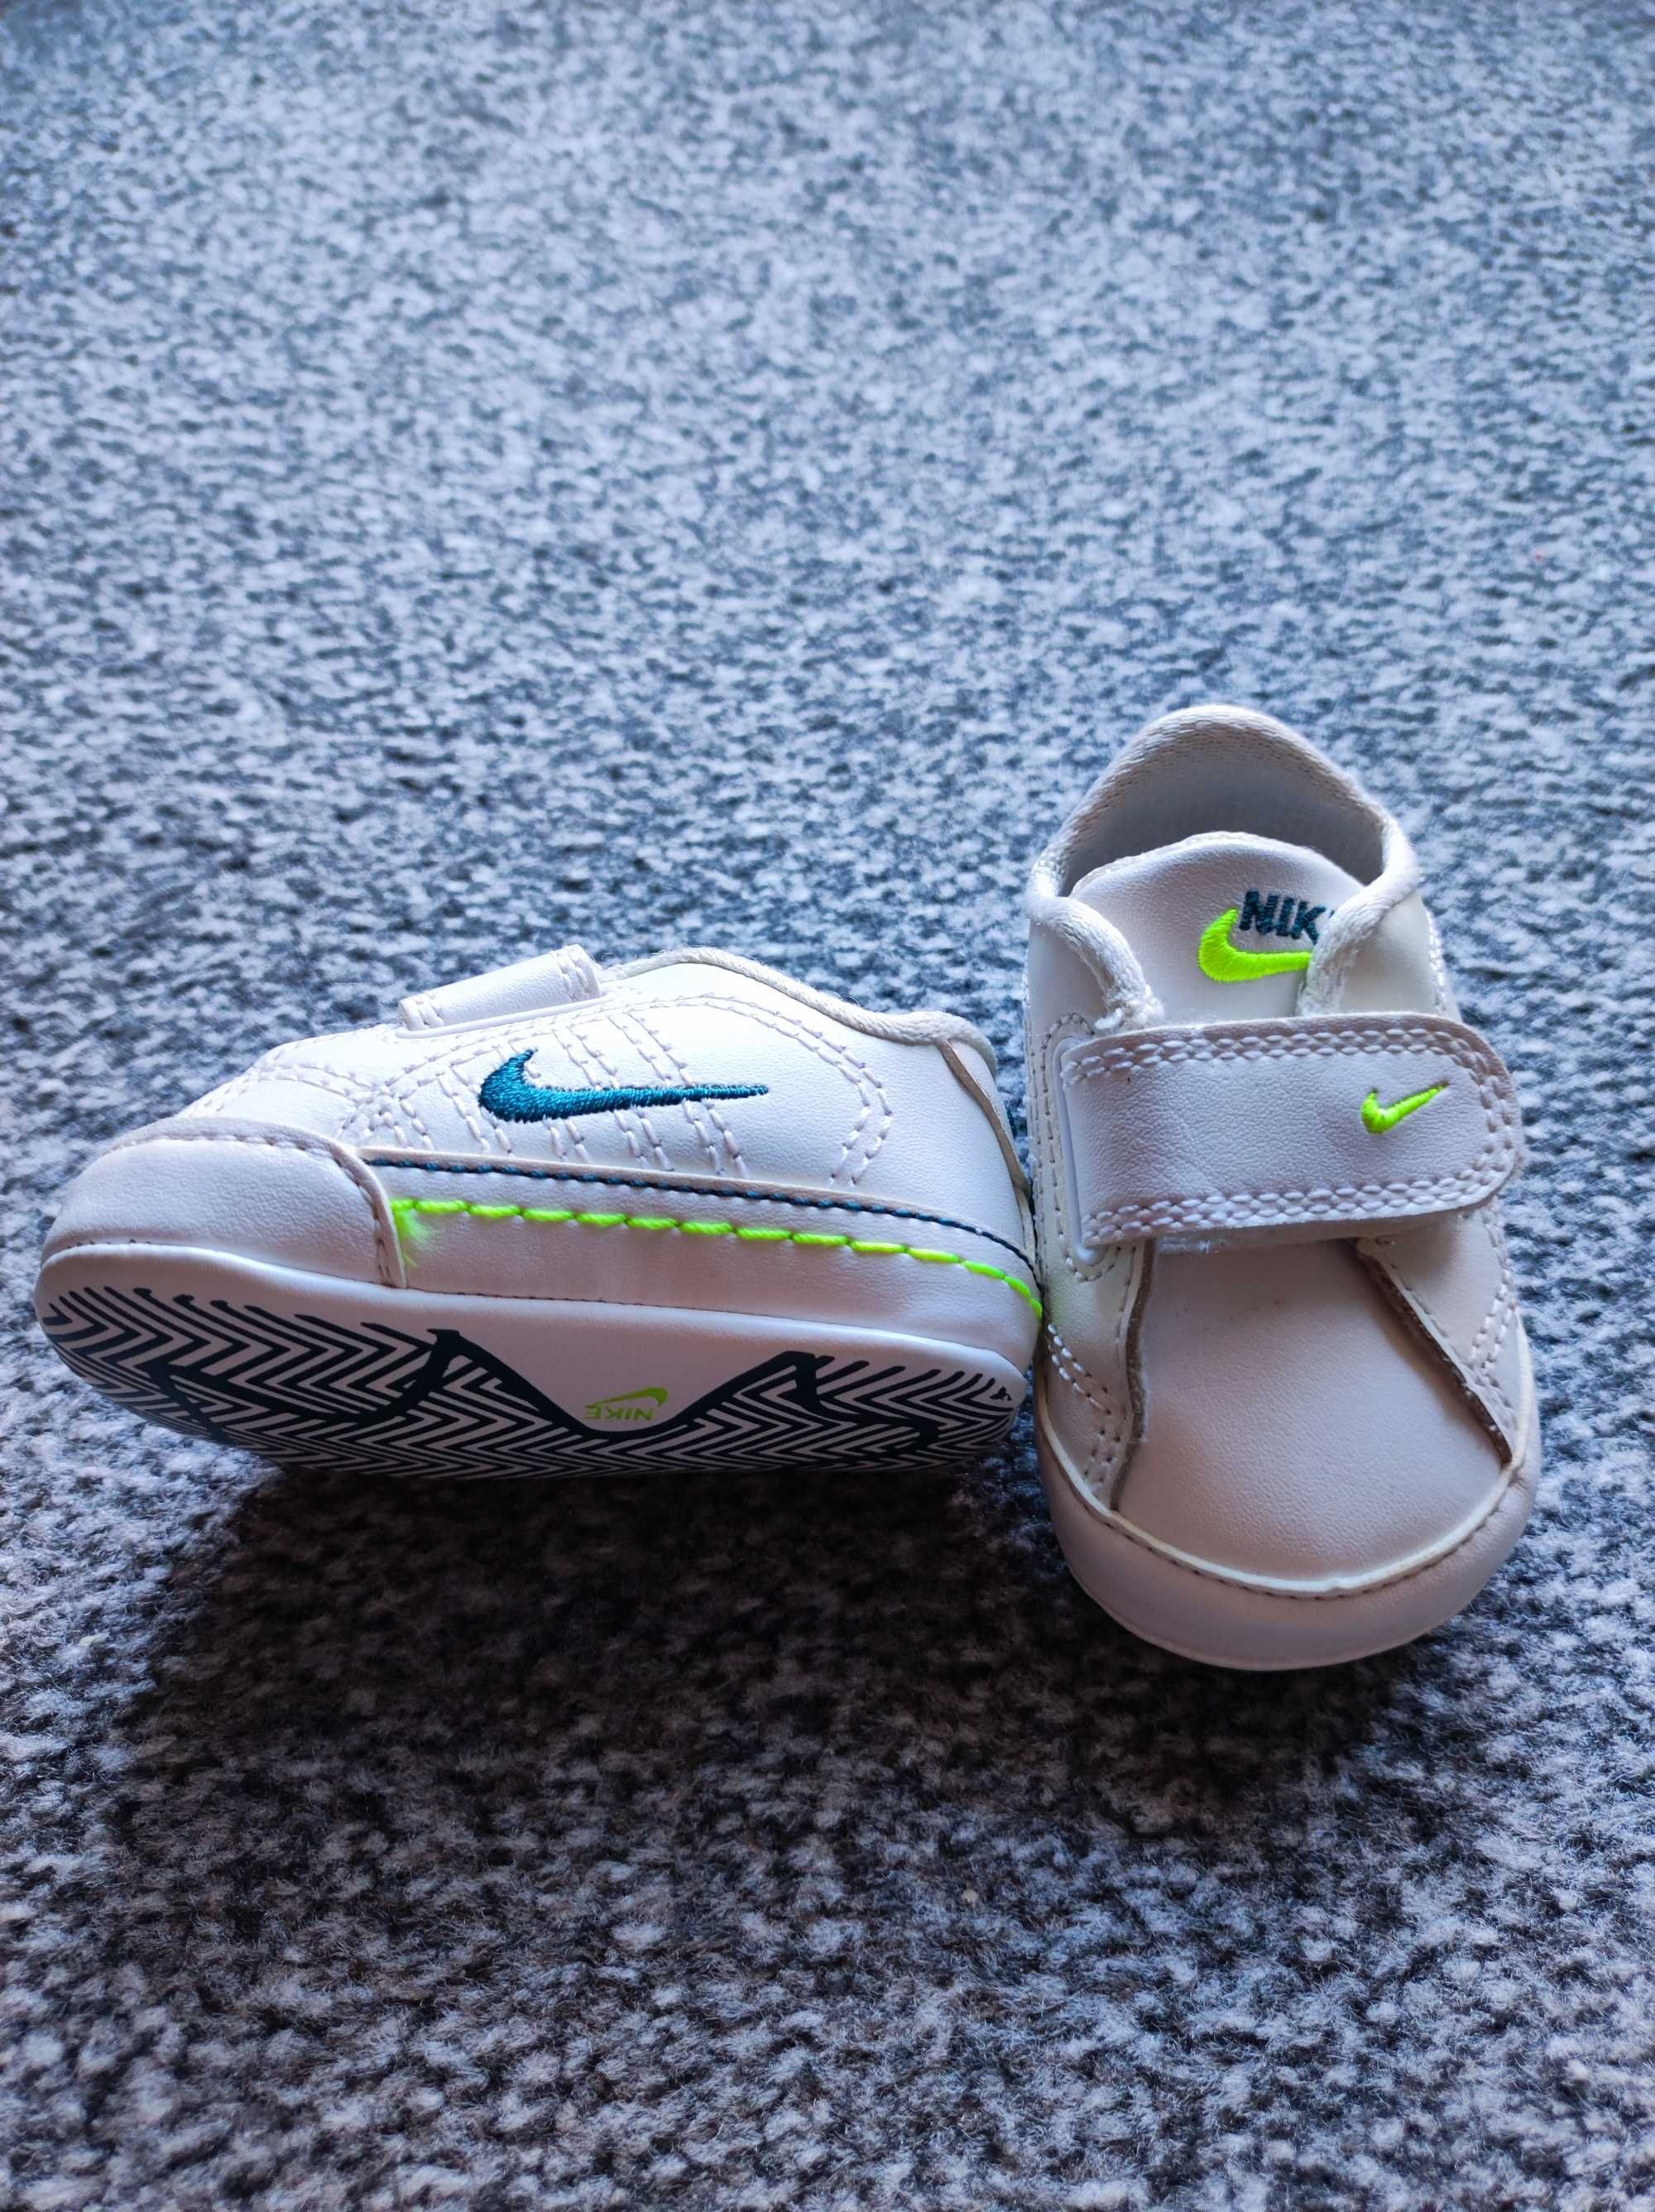 Buty Nike białe skórzane 10 cm